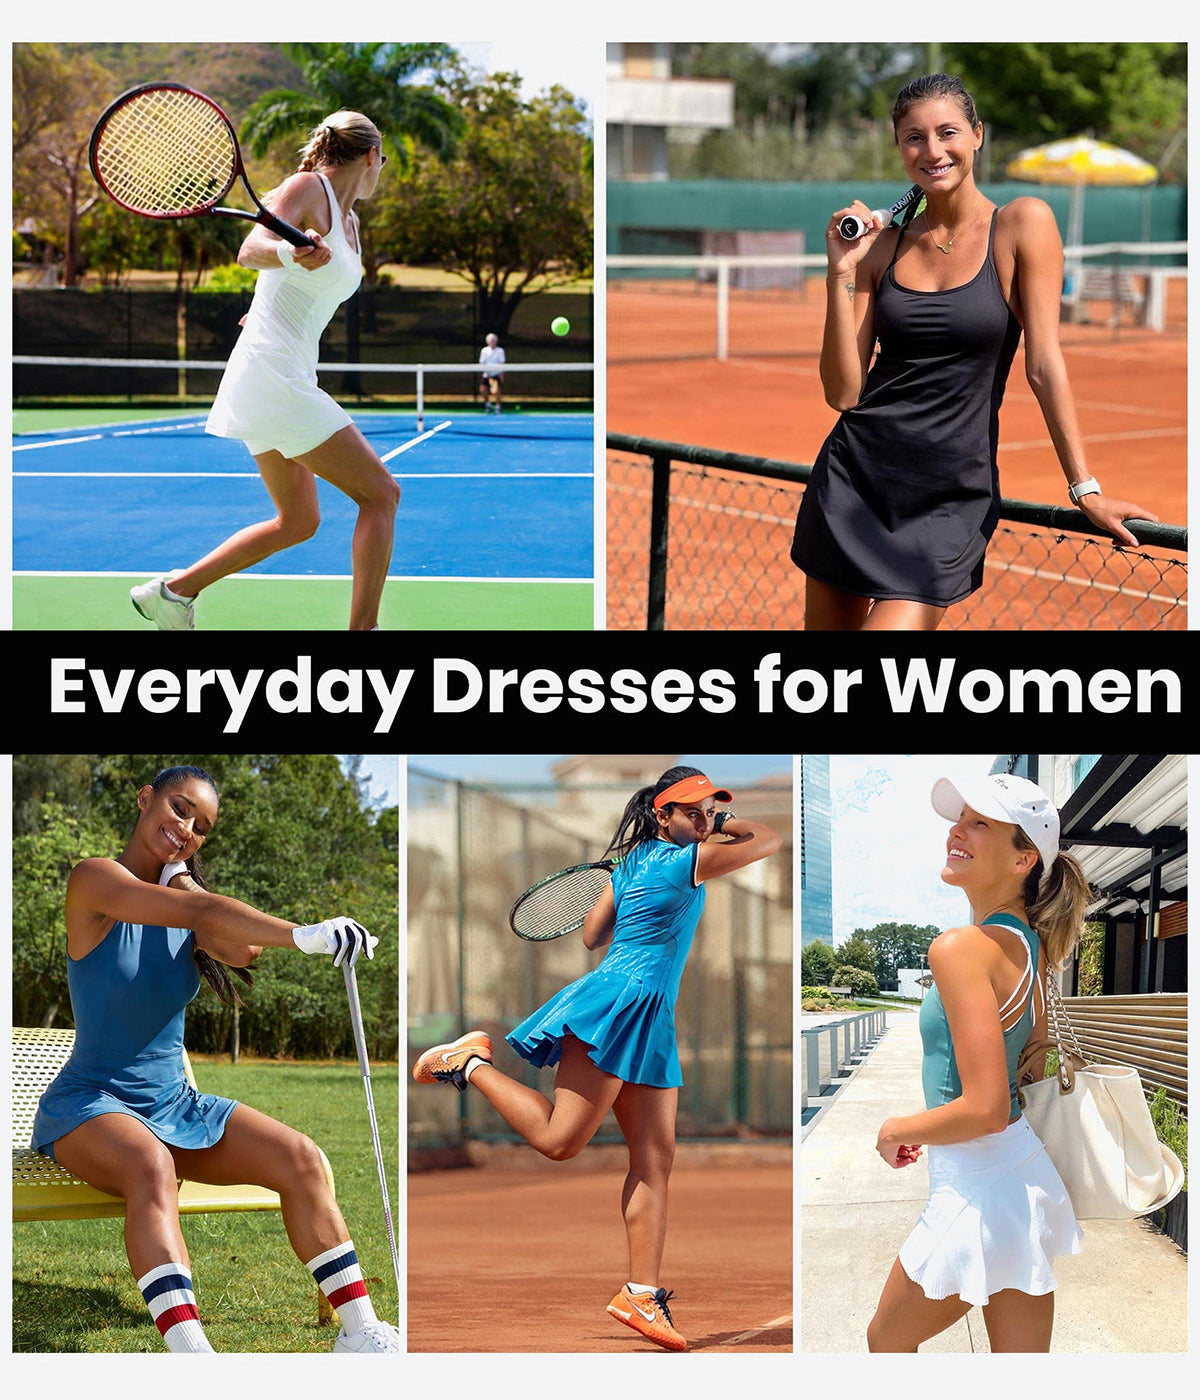 Heathyoga Womens Tennis Dress with Shorts Underneath Workout Dress-D5001ess  with Shorts Underneath Workout Dress-D5001